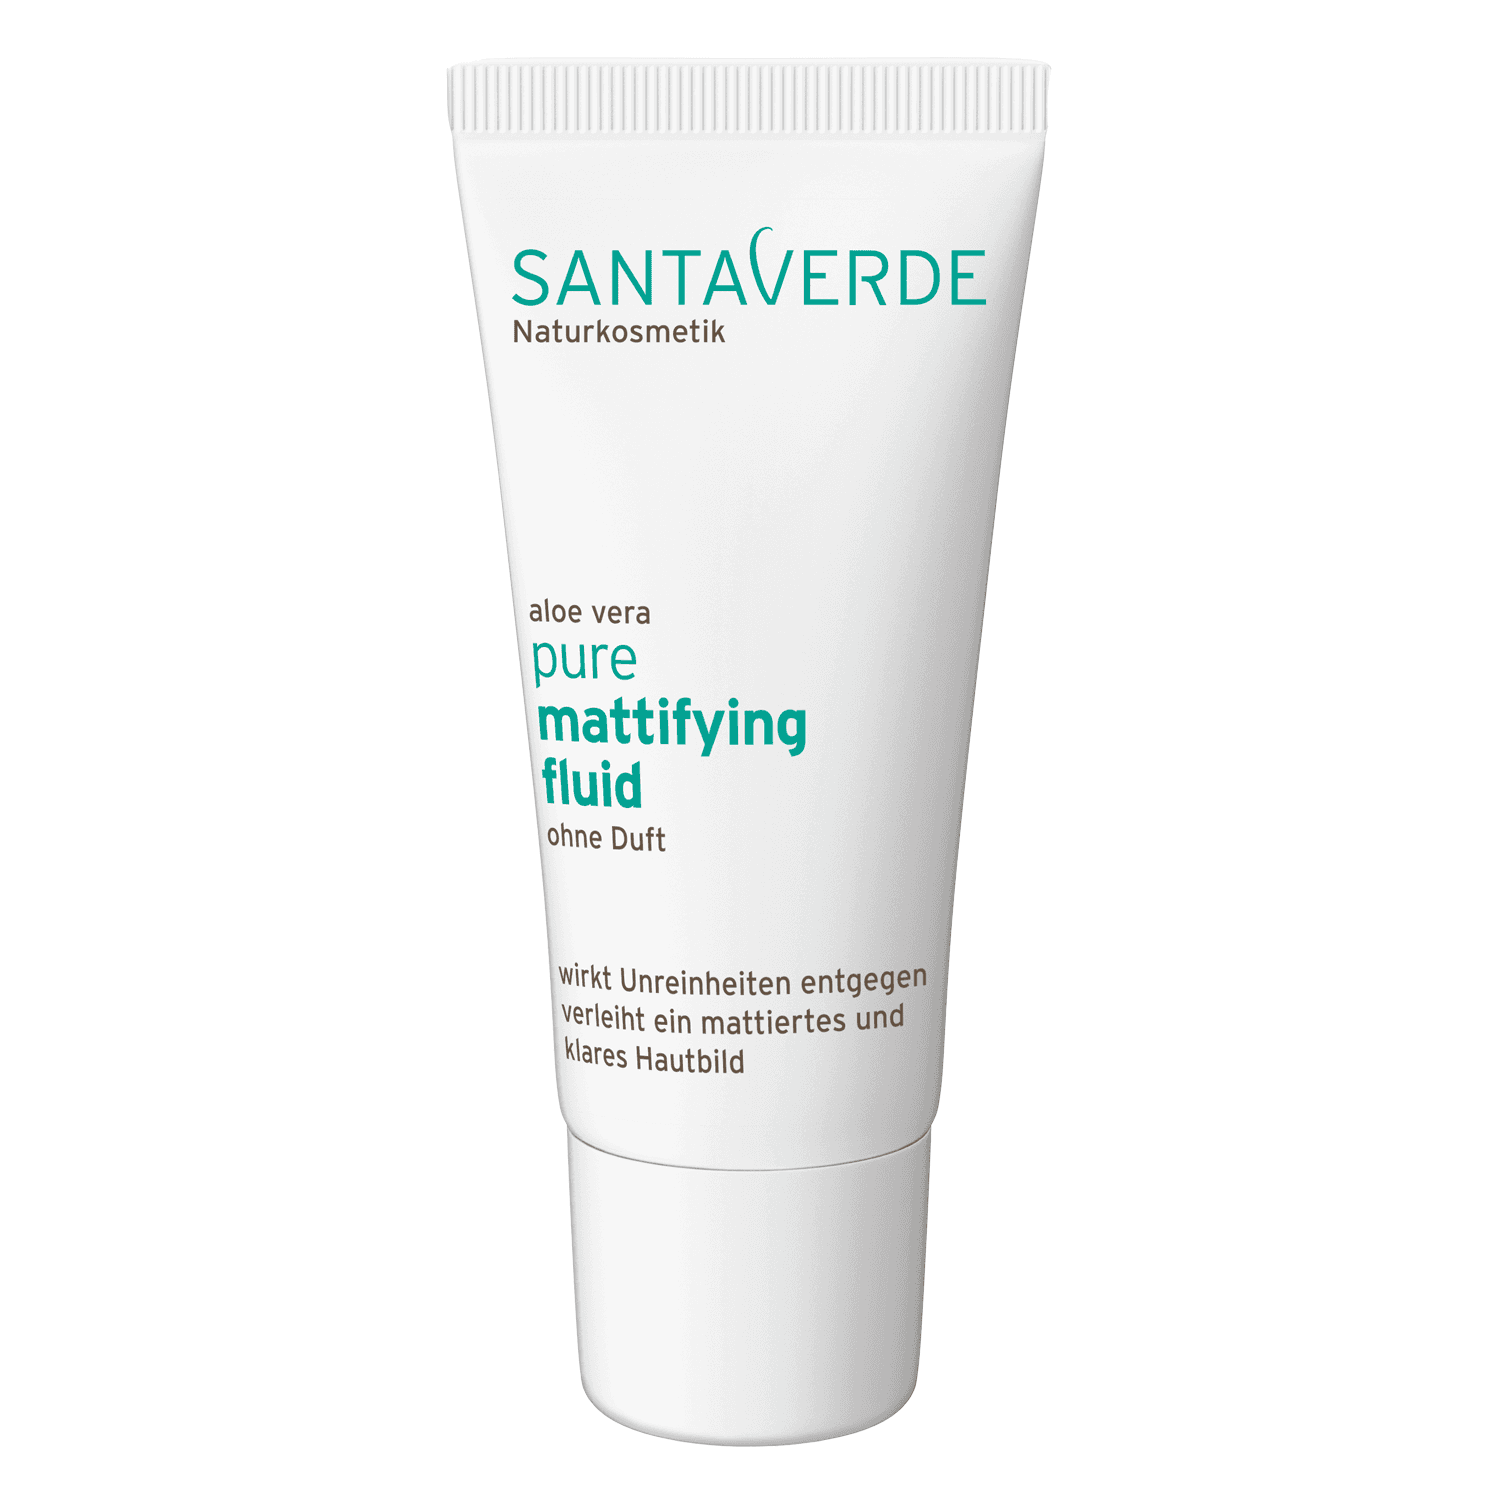 SANTAVERDE - aloe vera pure mattifying fluid ohne Duft